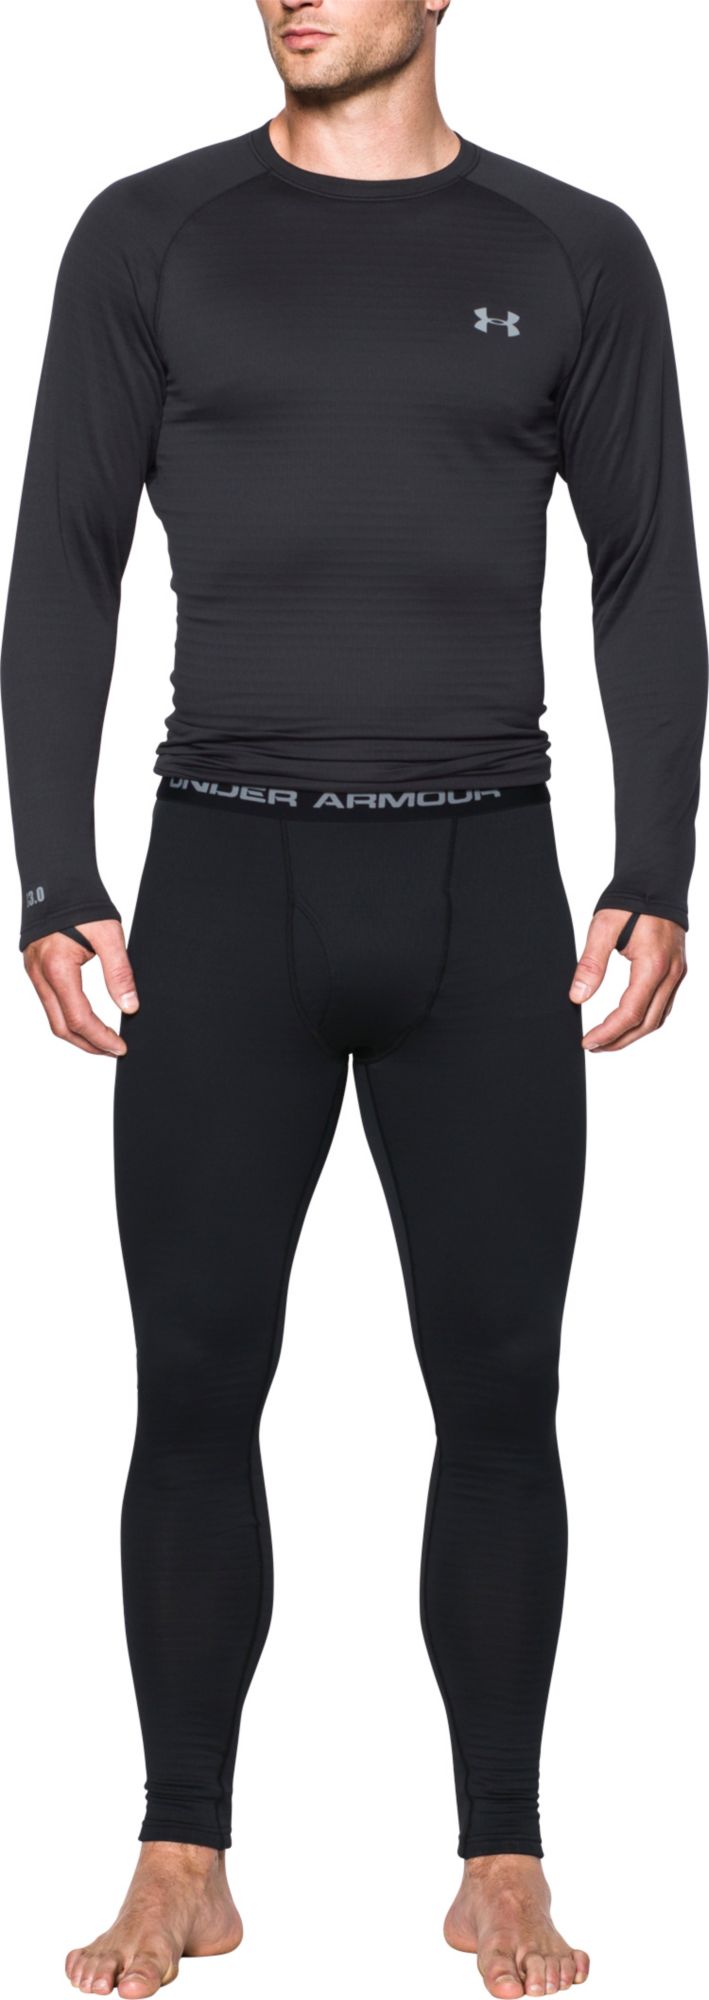 under armour men's 3.0 base layer leggings